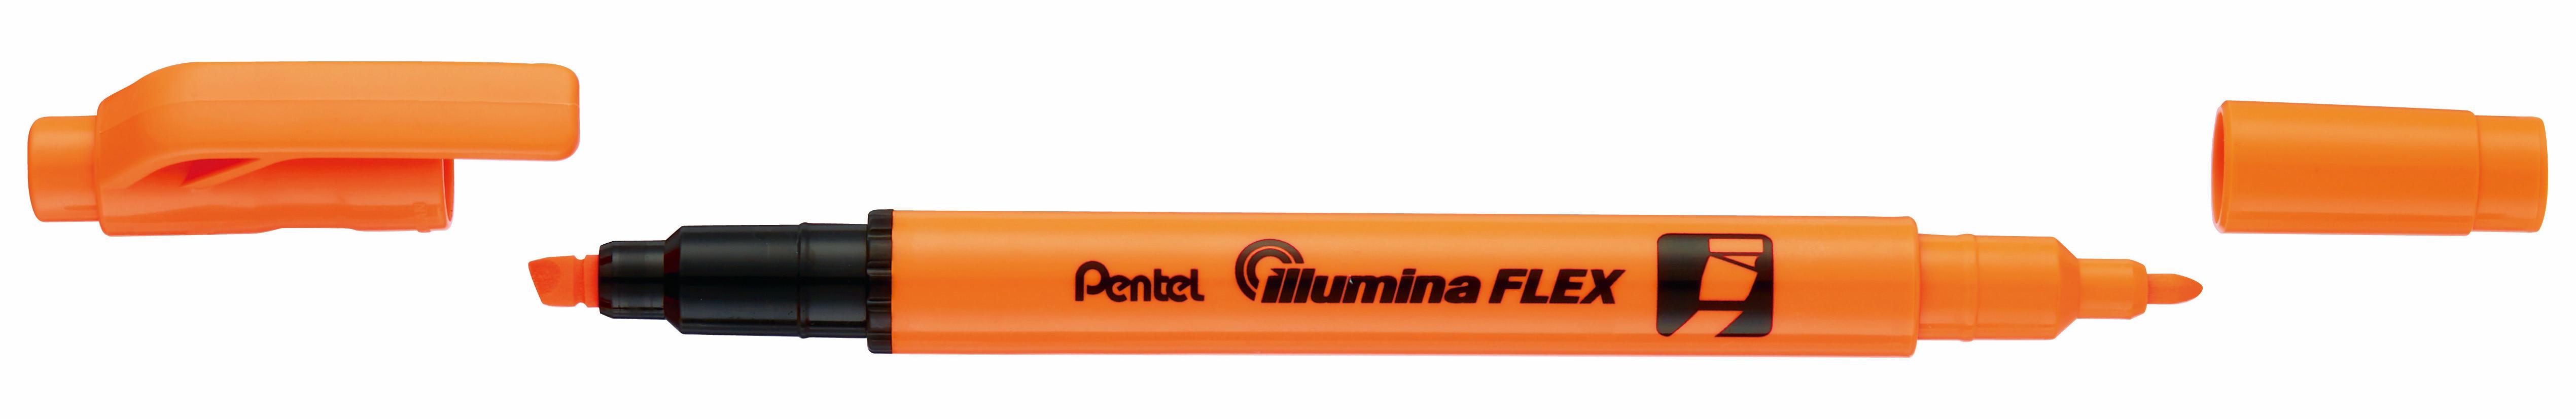 Pentel  Pentel Illumina Flex marqueur 1 pièce(s) Pointe fine/biseautée Orange 